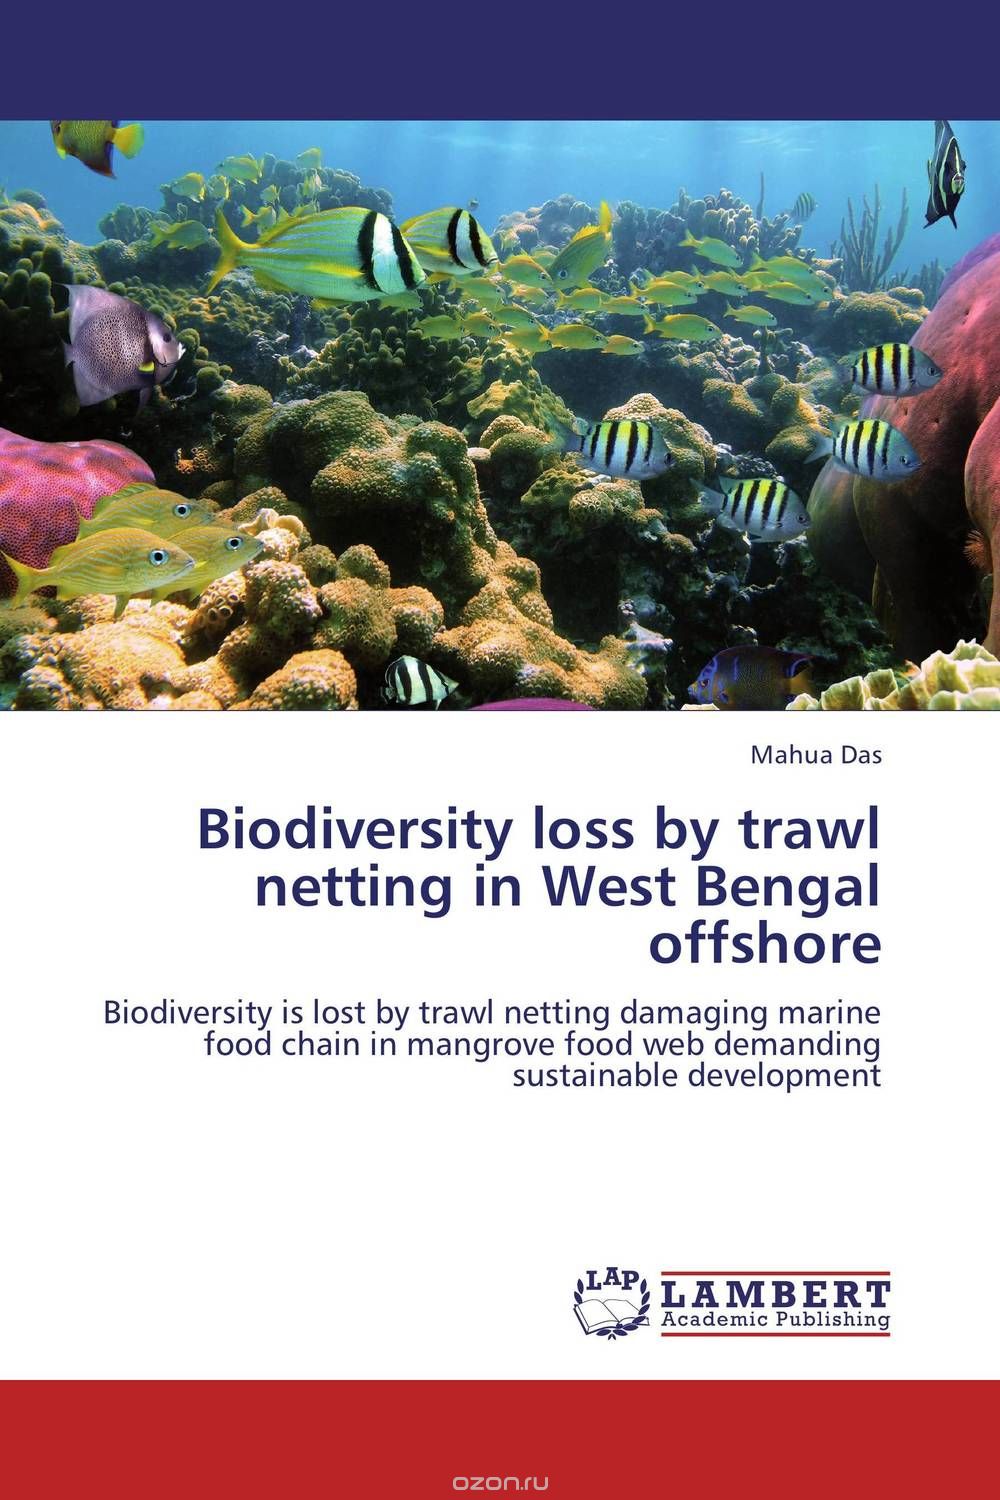 Скачать книгу "Biodiversity loss by trawl netting in West Bengal offshore"